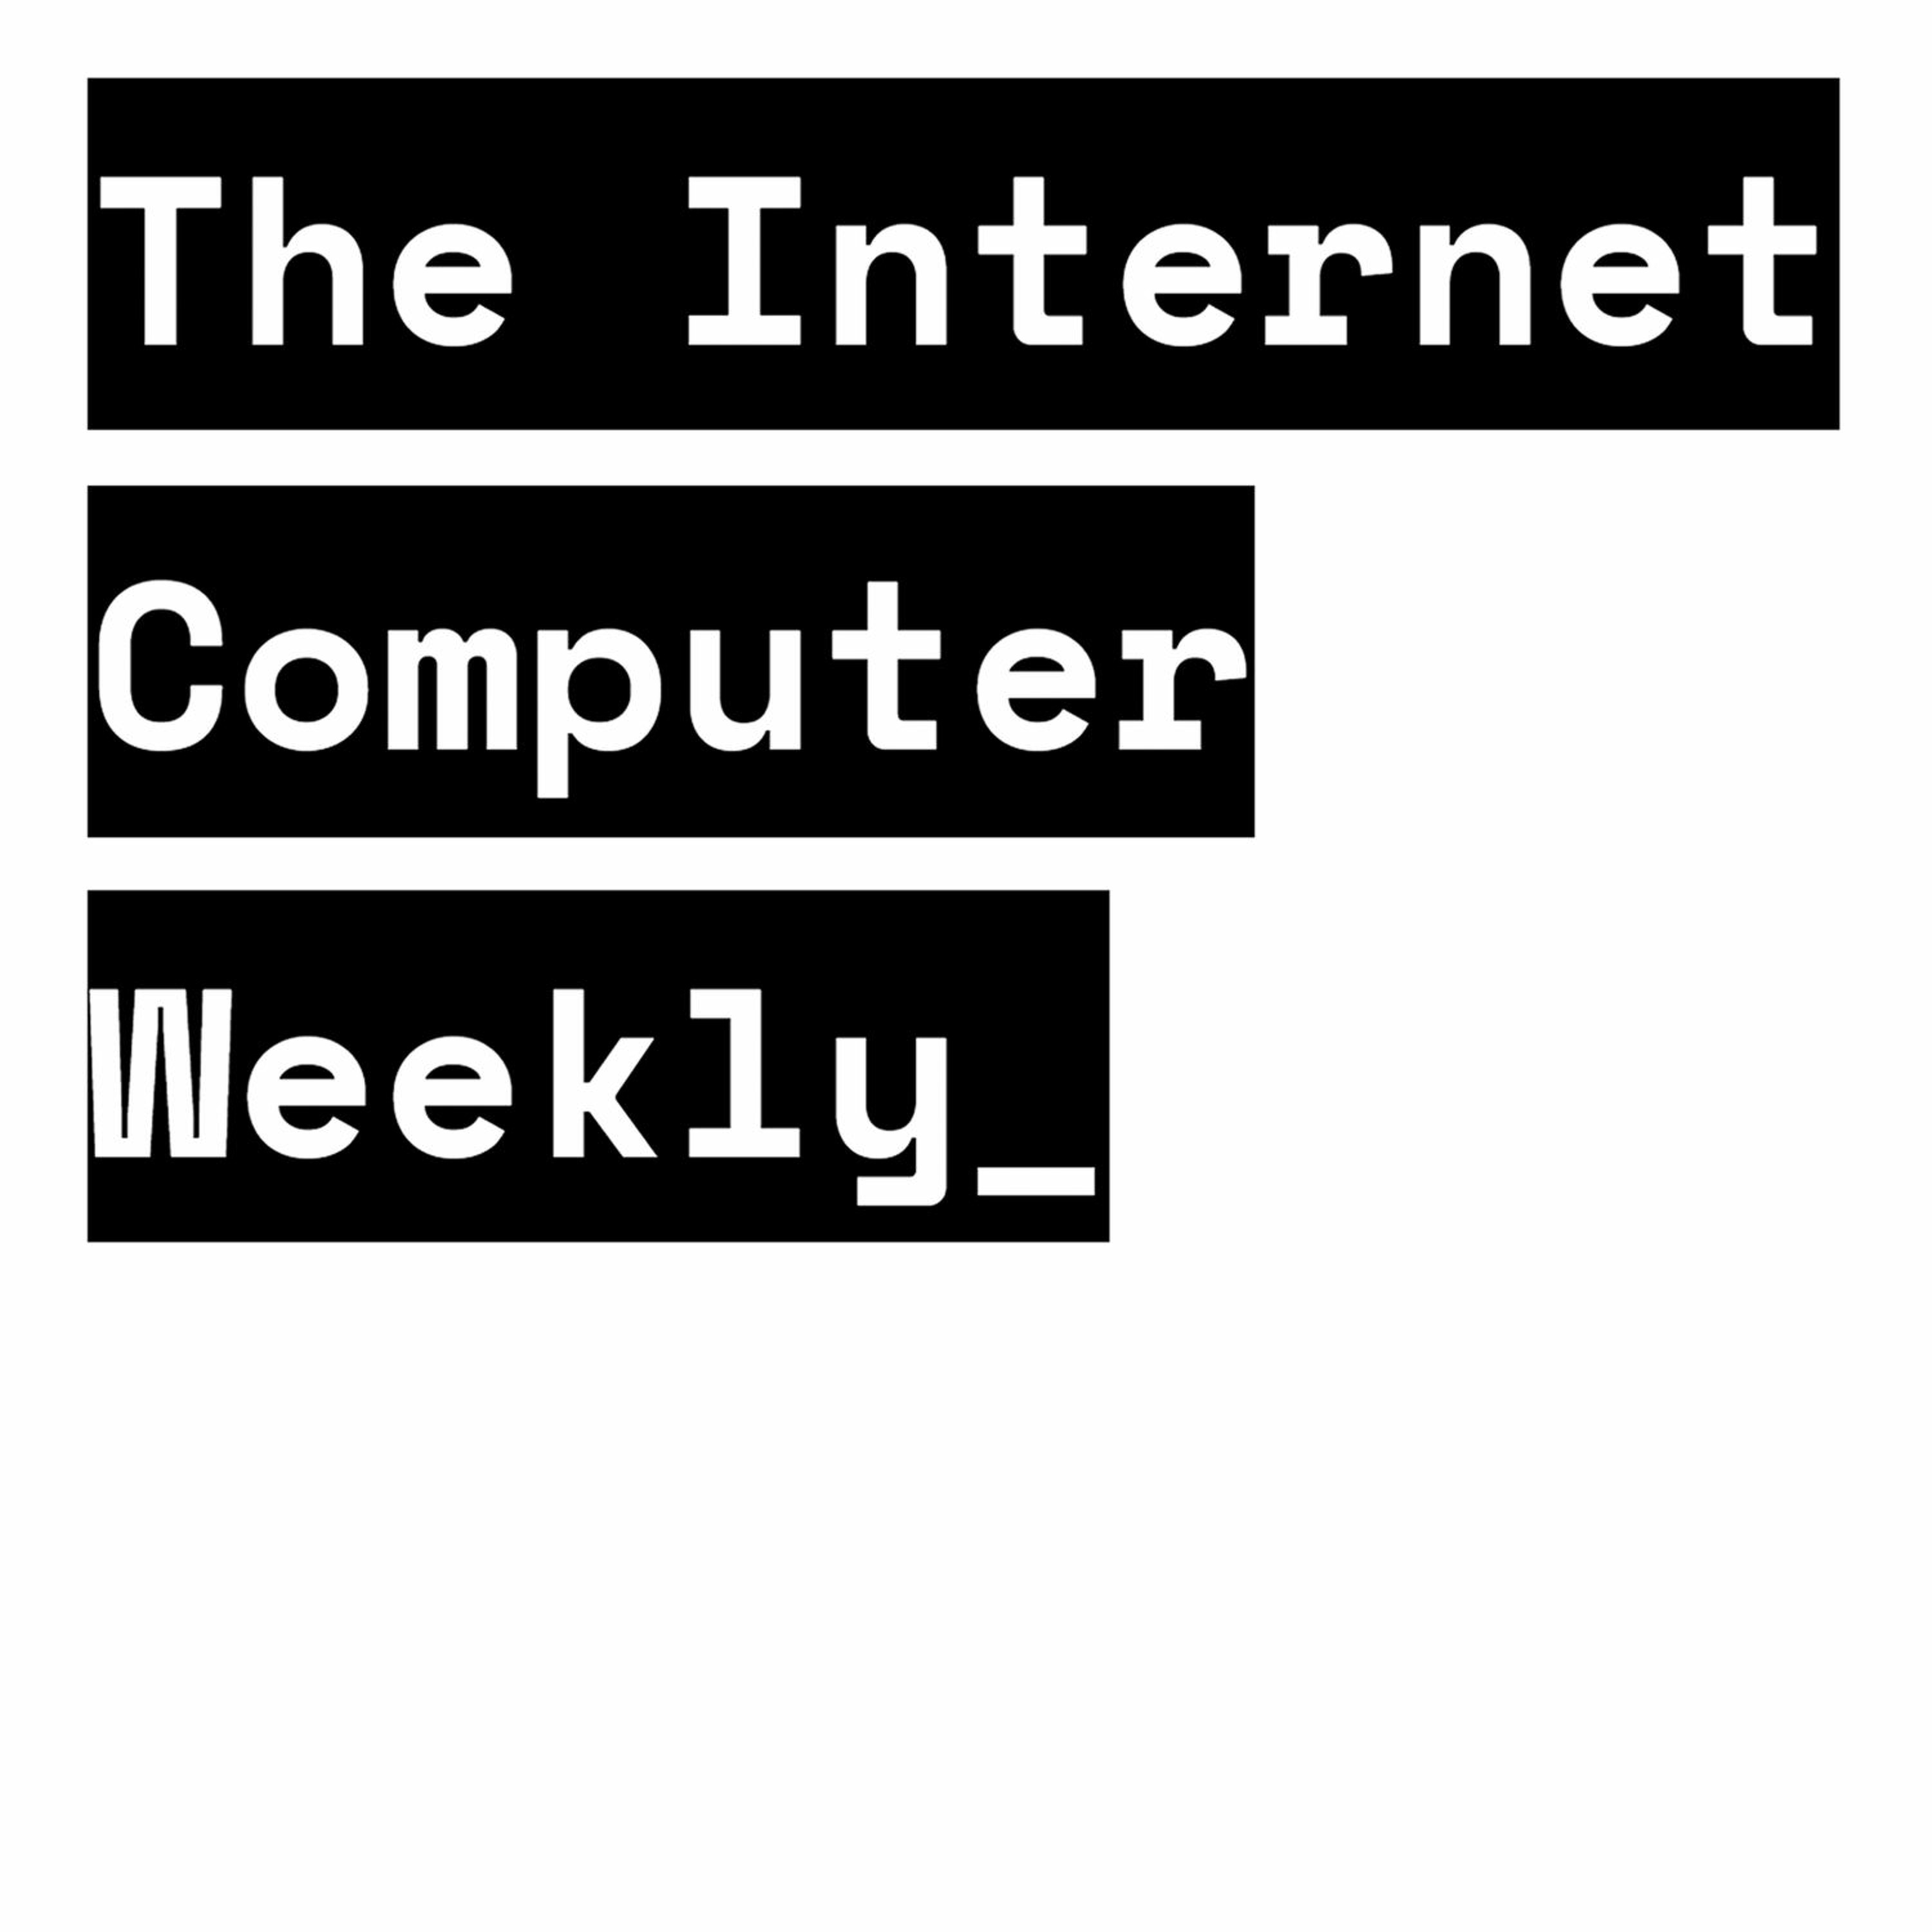 The Internet Computer Weekly #1 - Capsule